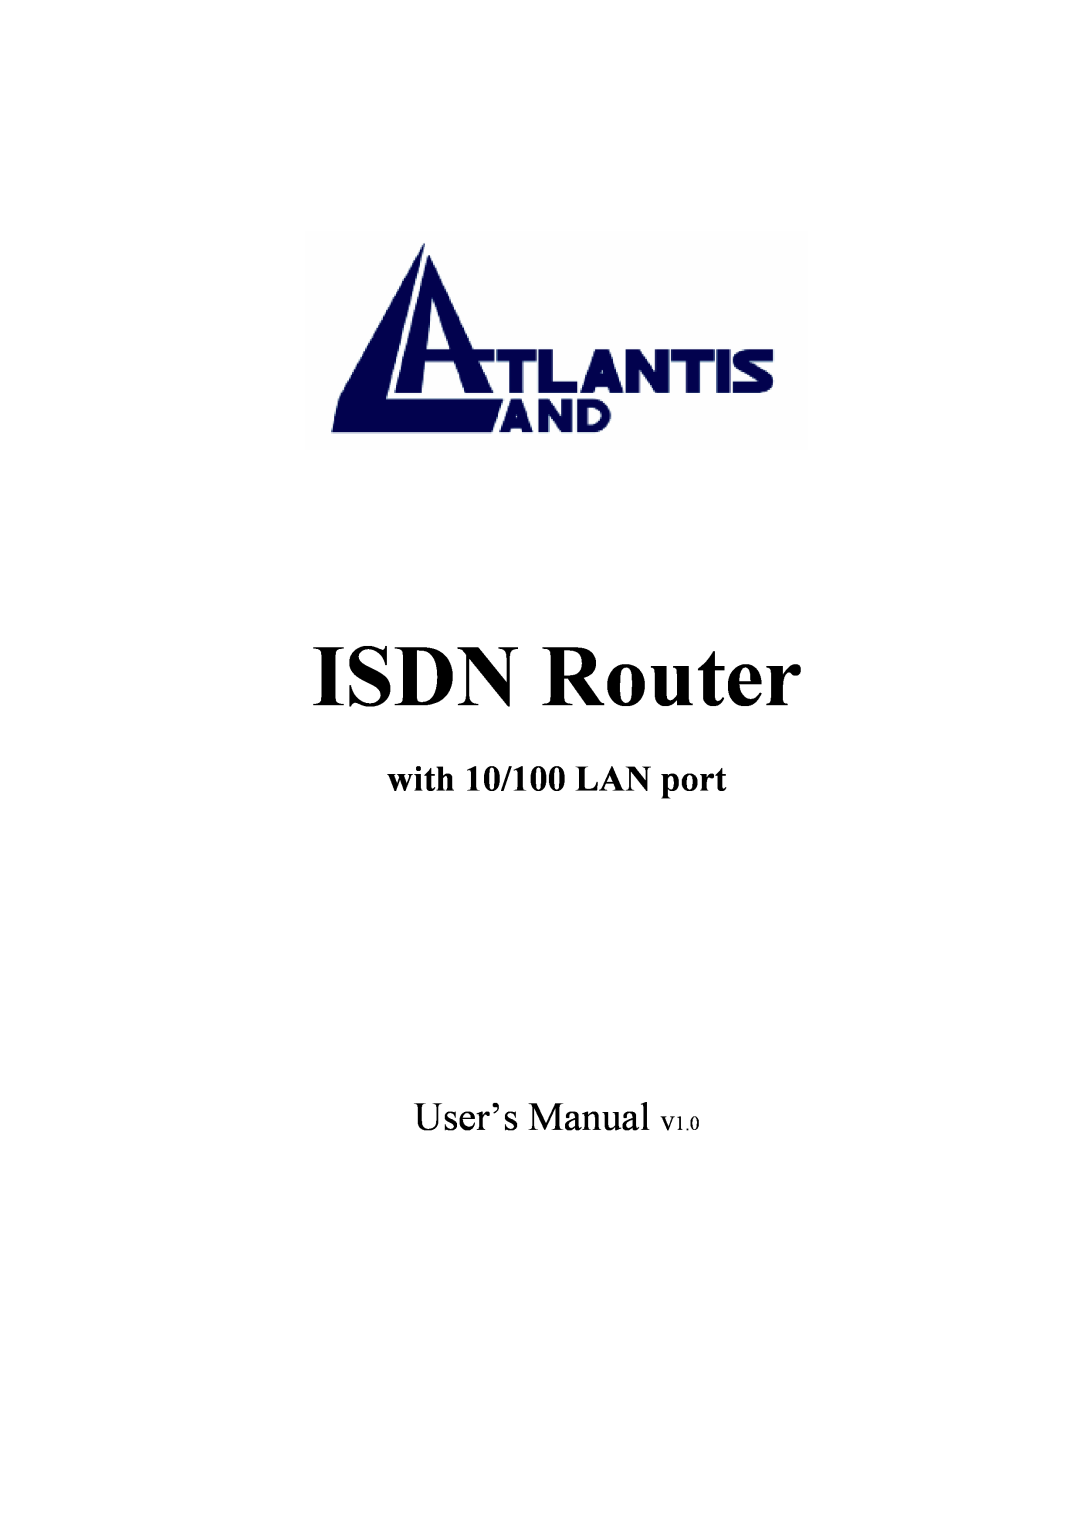 Atlantis Land ATLMMR MNE01 user manual with 10/100 LAN port, ISDN Router, User’s Manual 